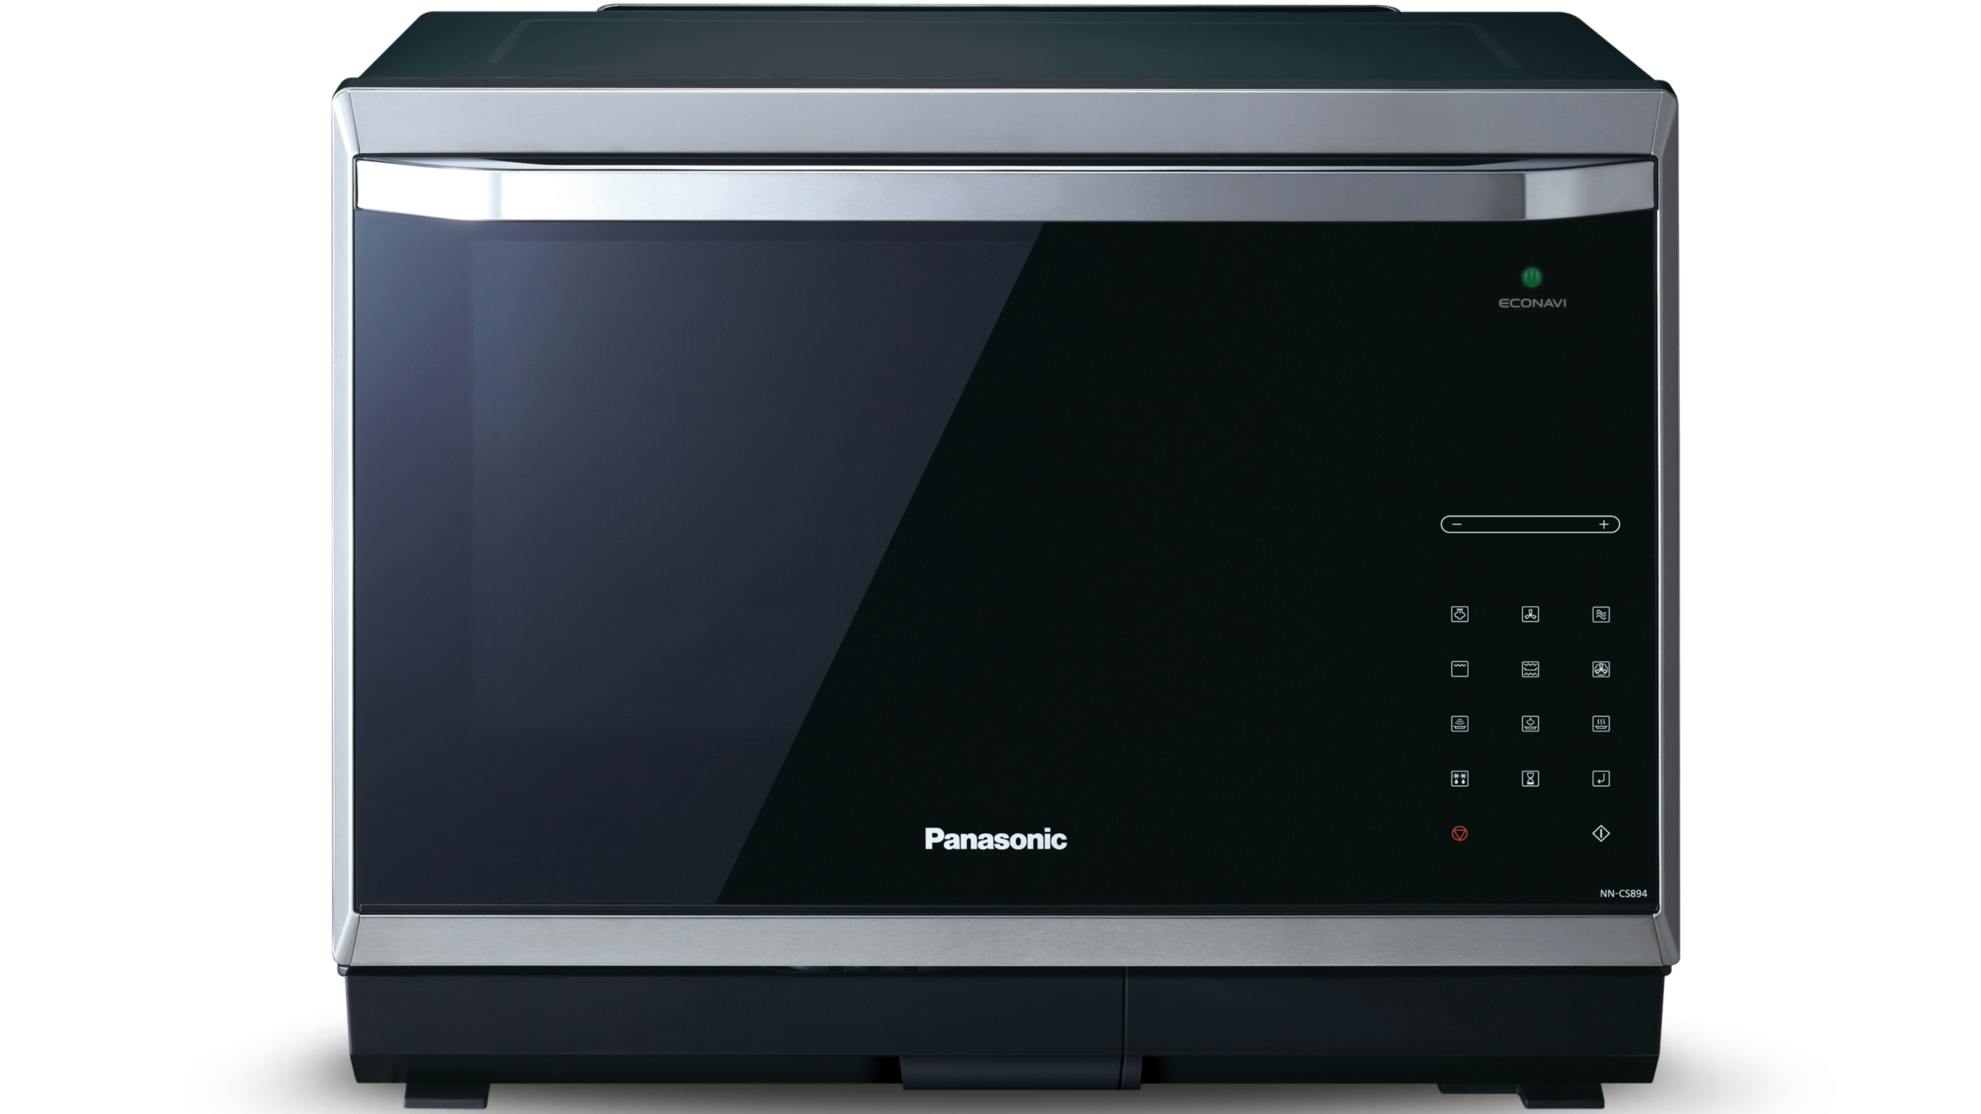 Panasonic 32L ECONAVI Inverter Steam Convection Microwave Oven Harvey